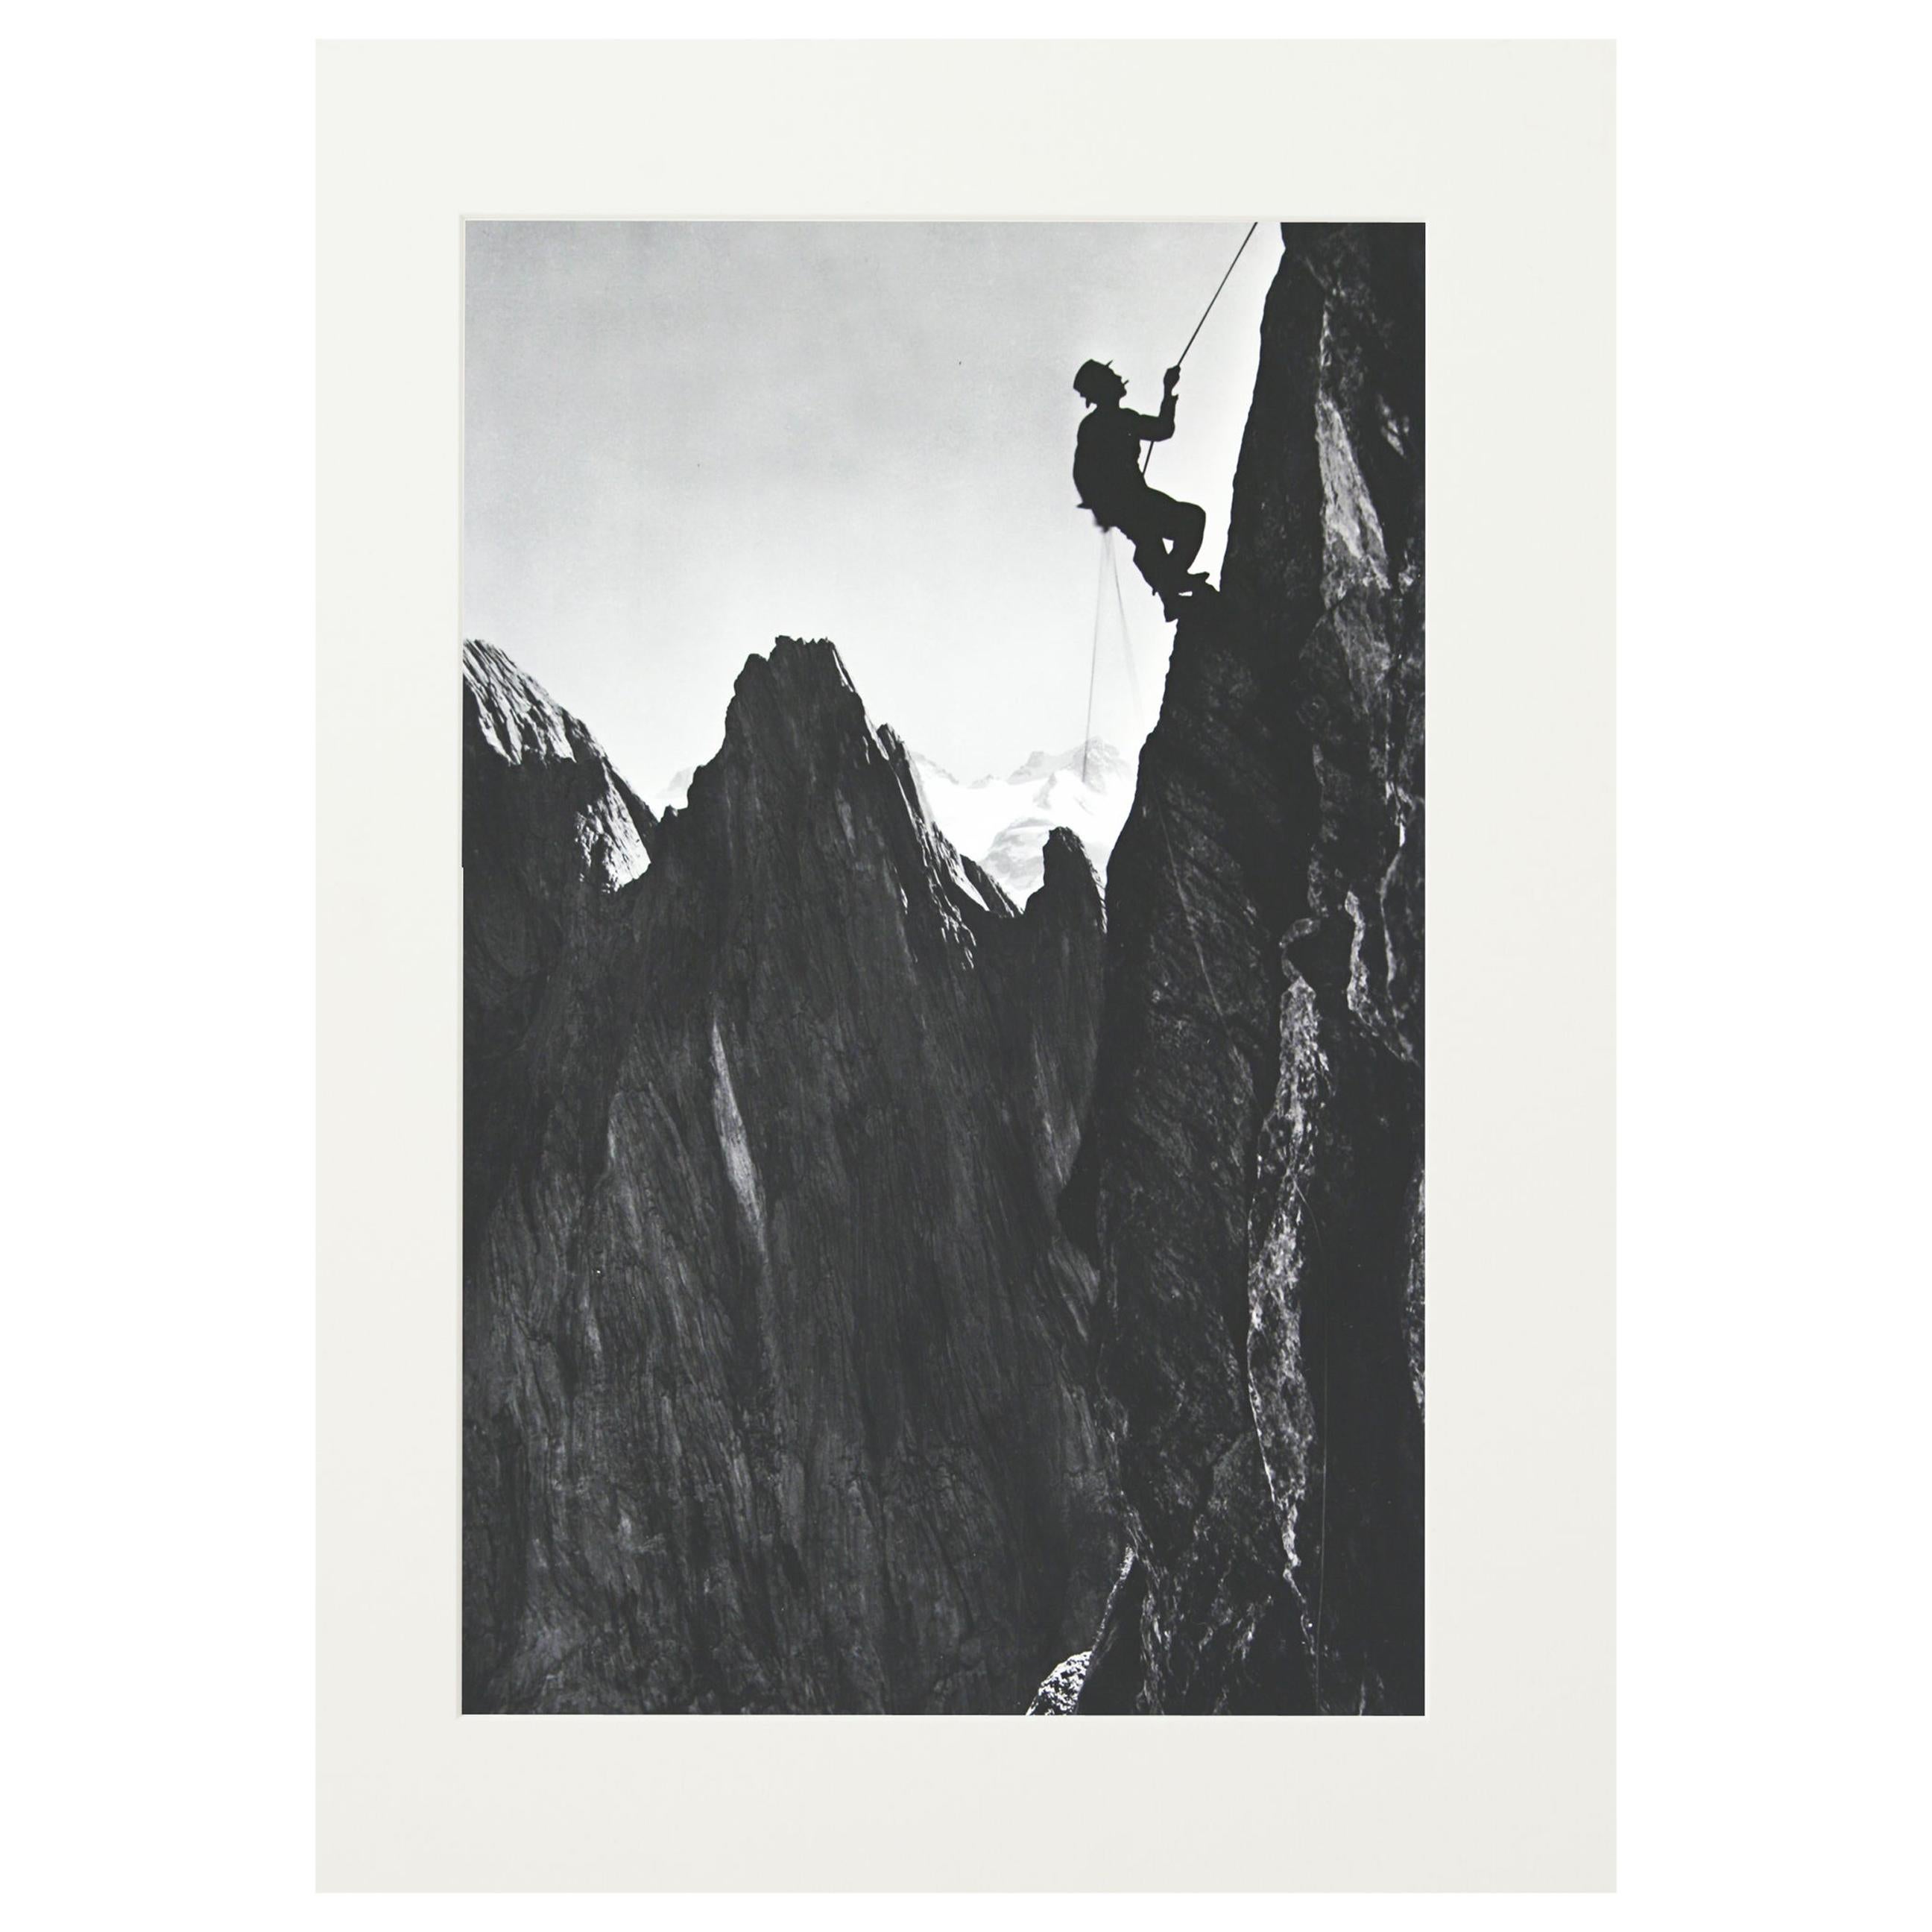 Vintage Alpine Photograph, Climber, Simelistock, Switzerland